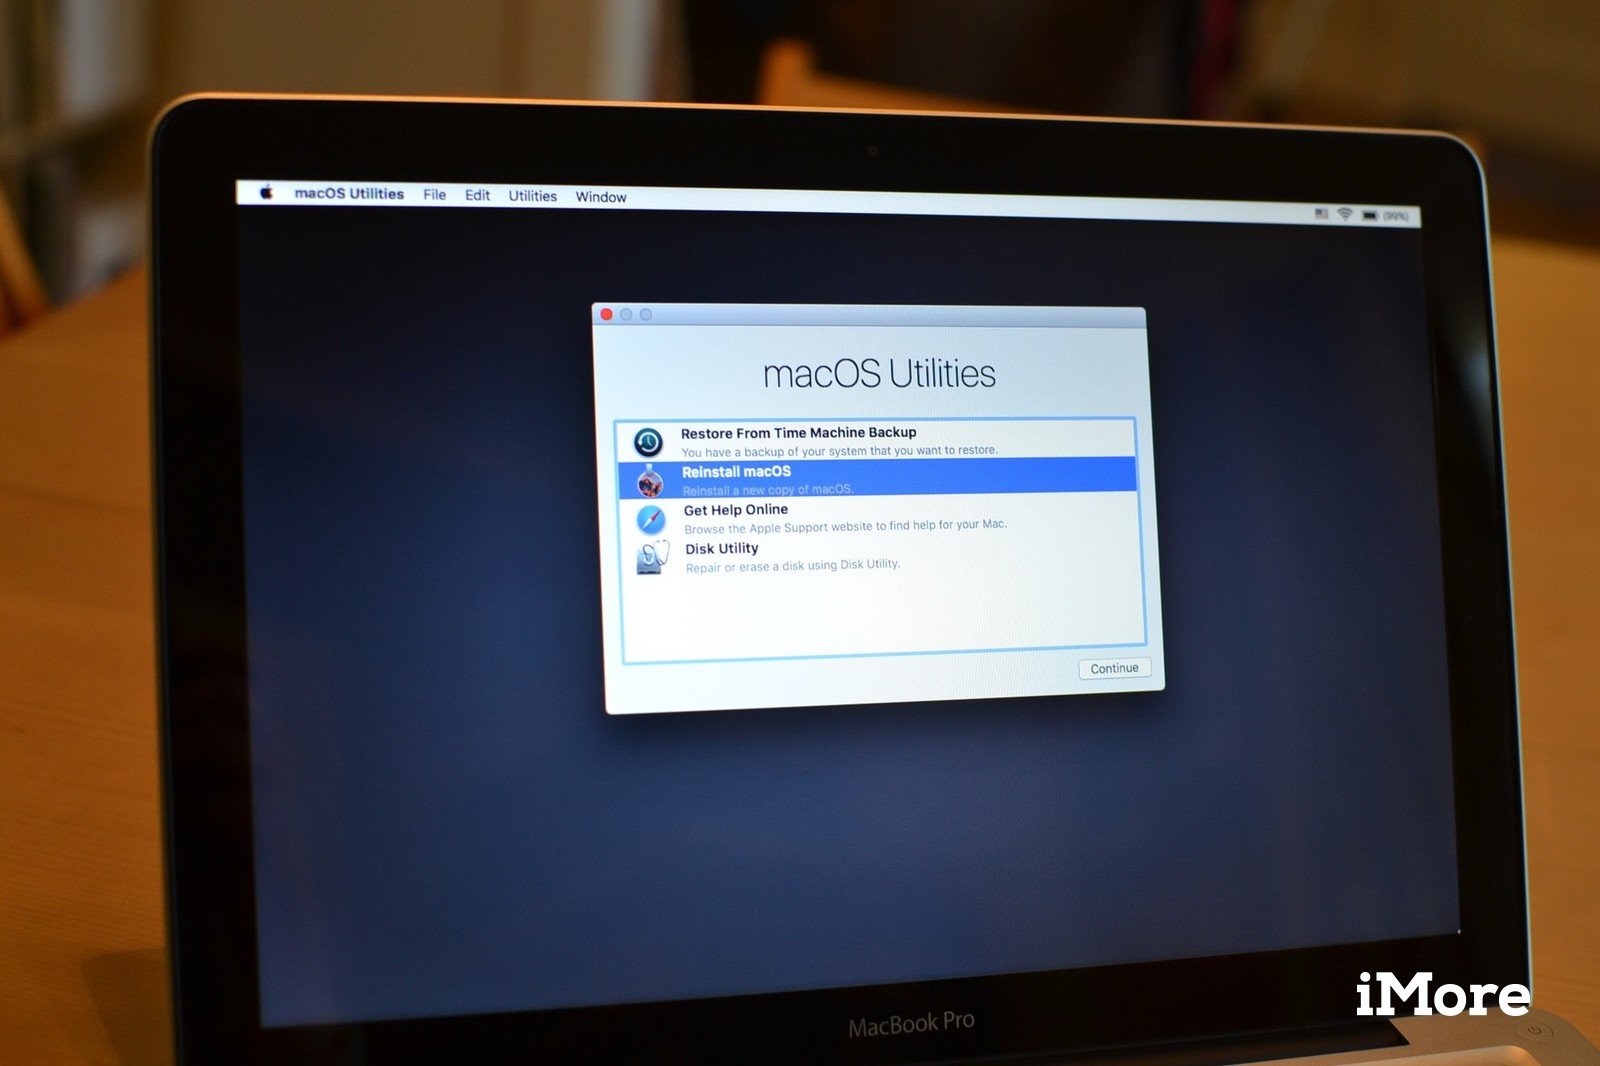 mac desktop cleaner 2016